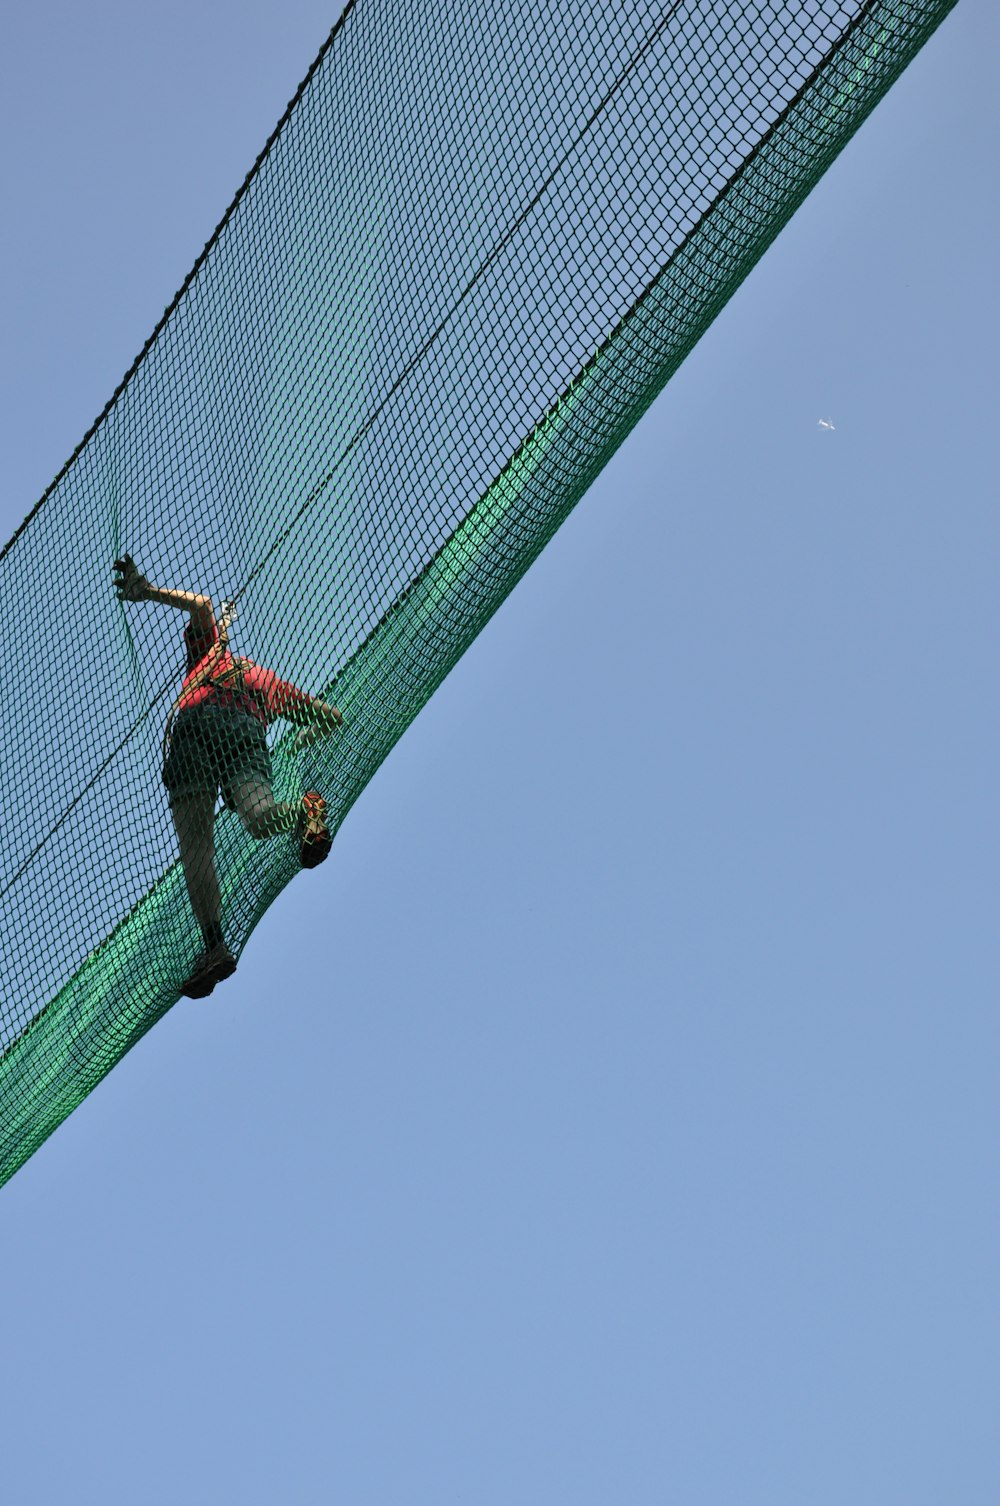 person crossing net bridge